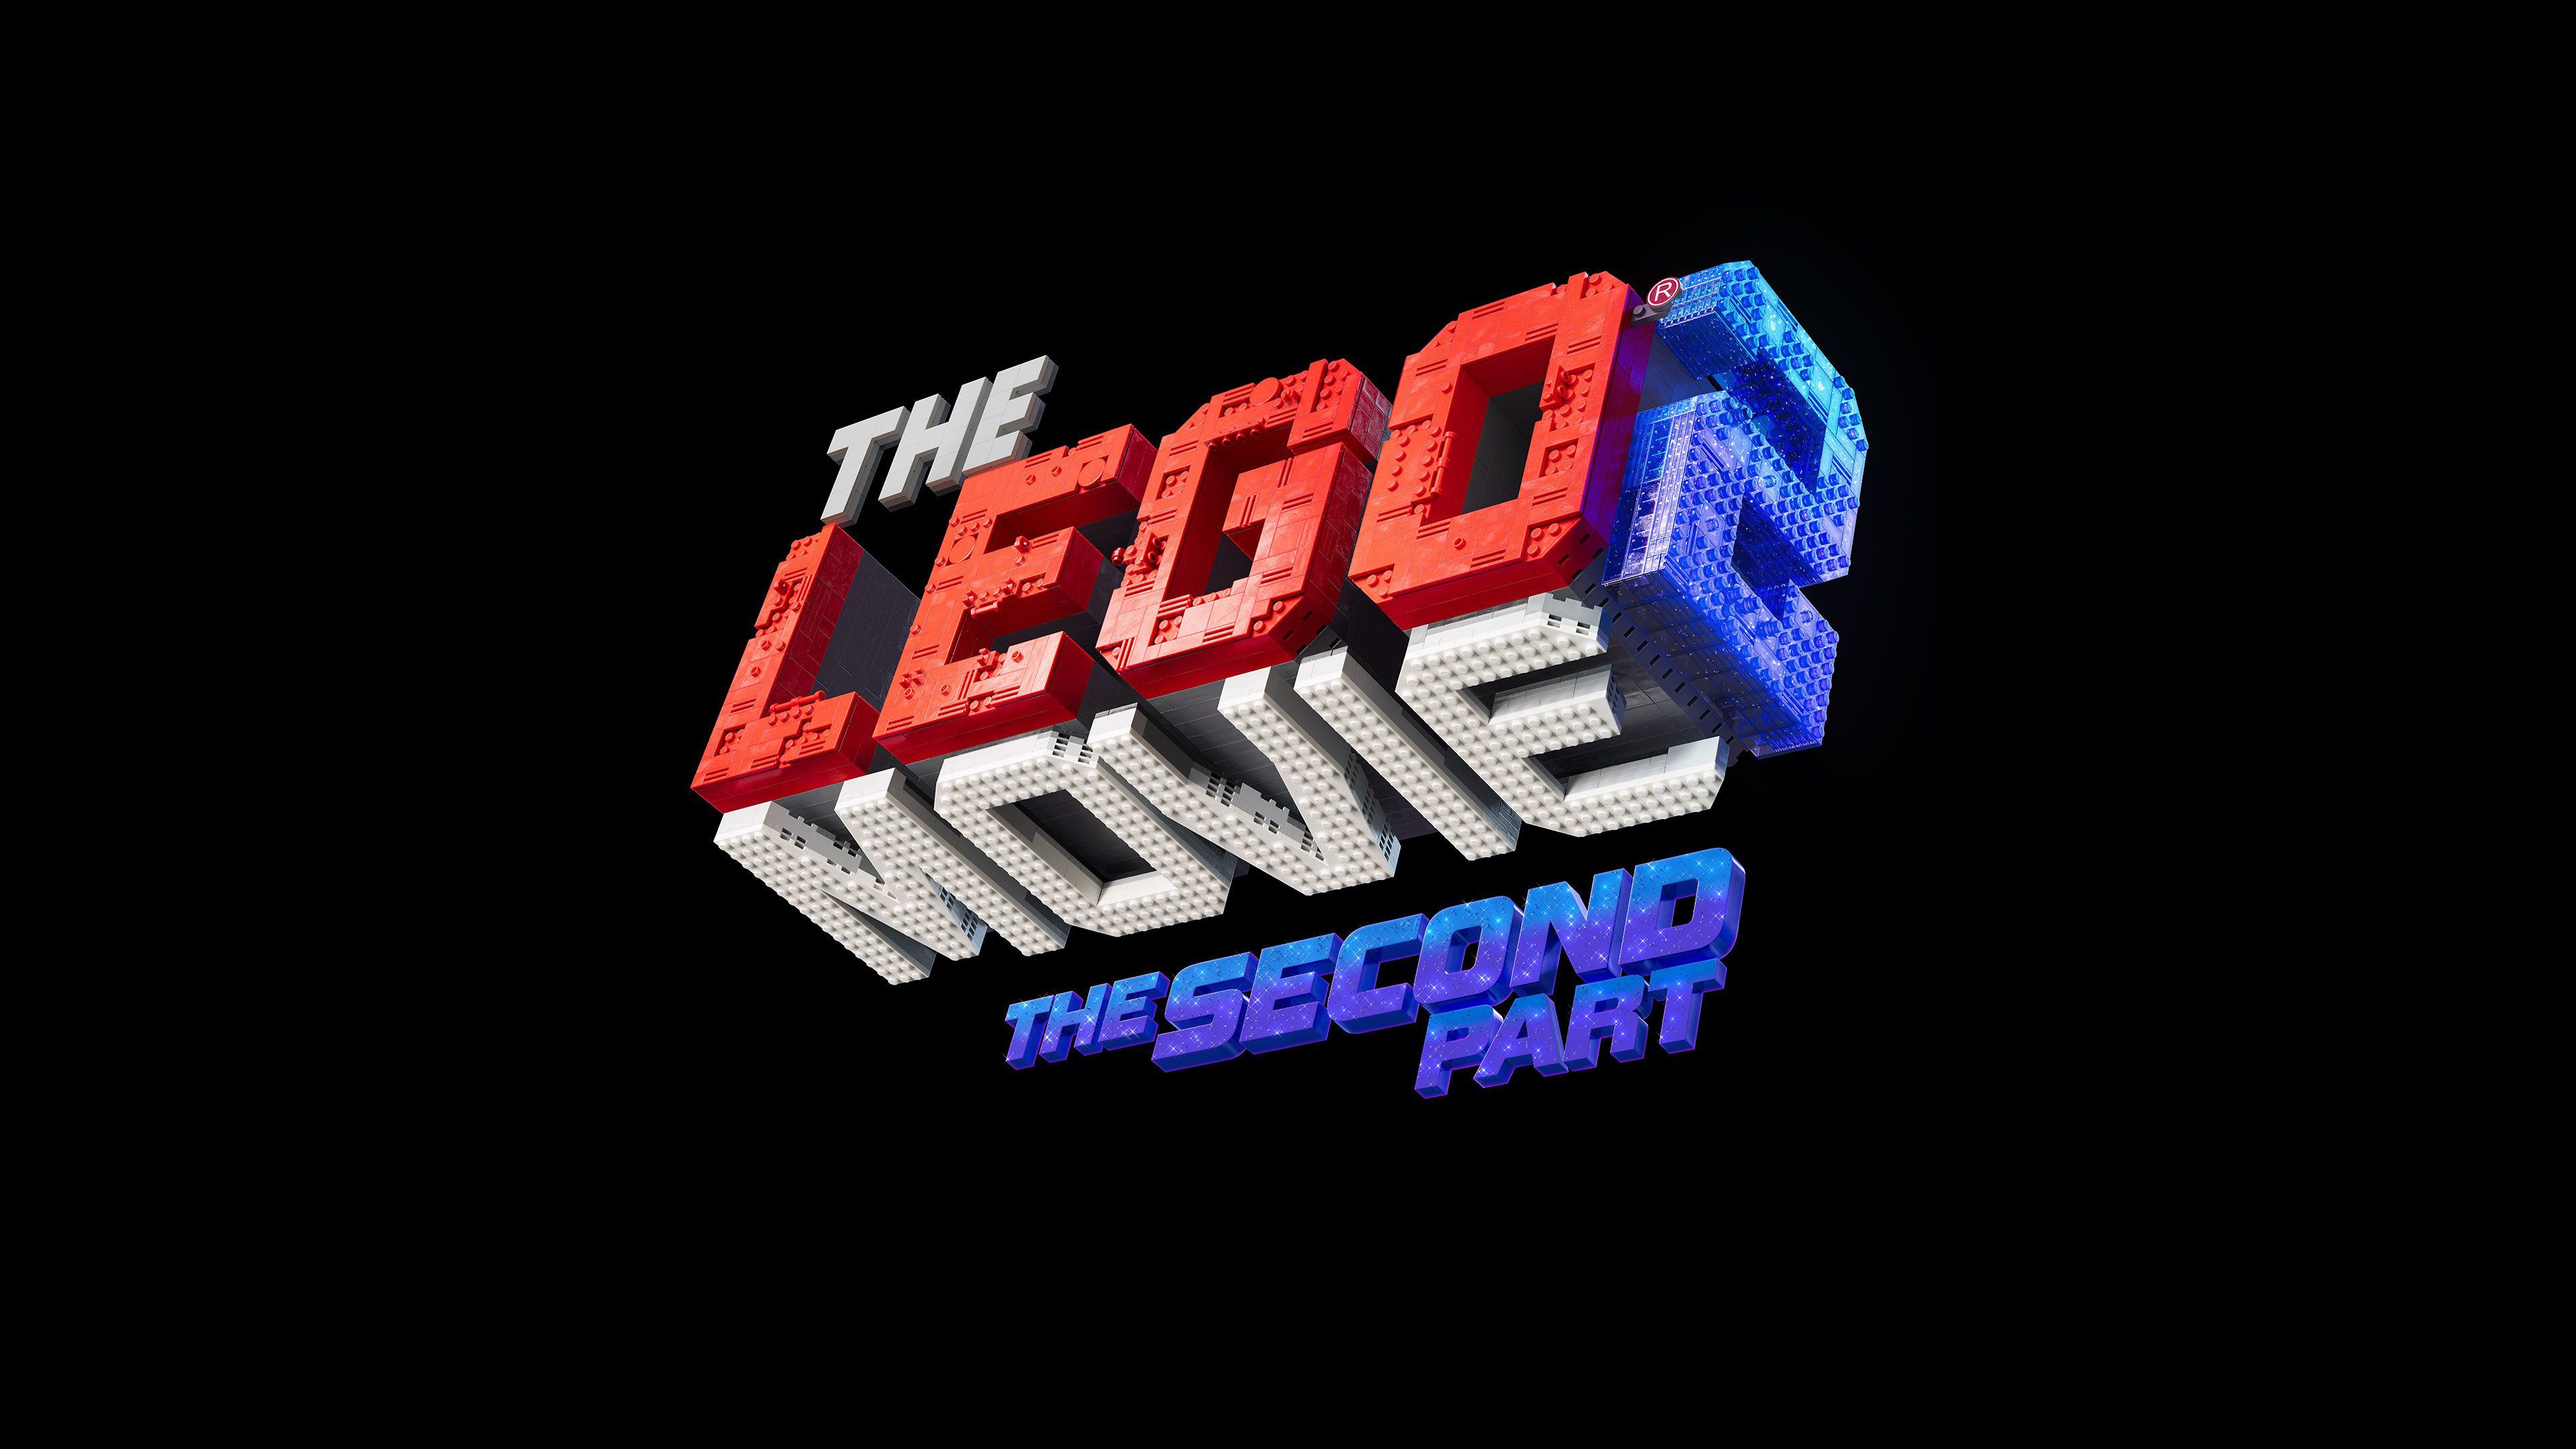 The Lego Movie 2 Logo Background Wallpaper 66152 3840x2160px